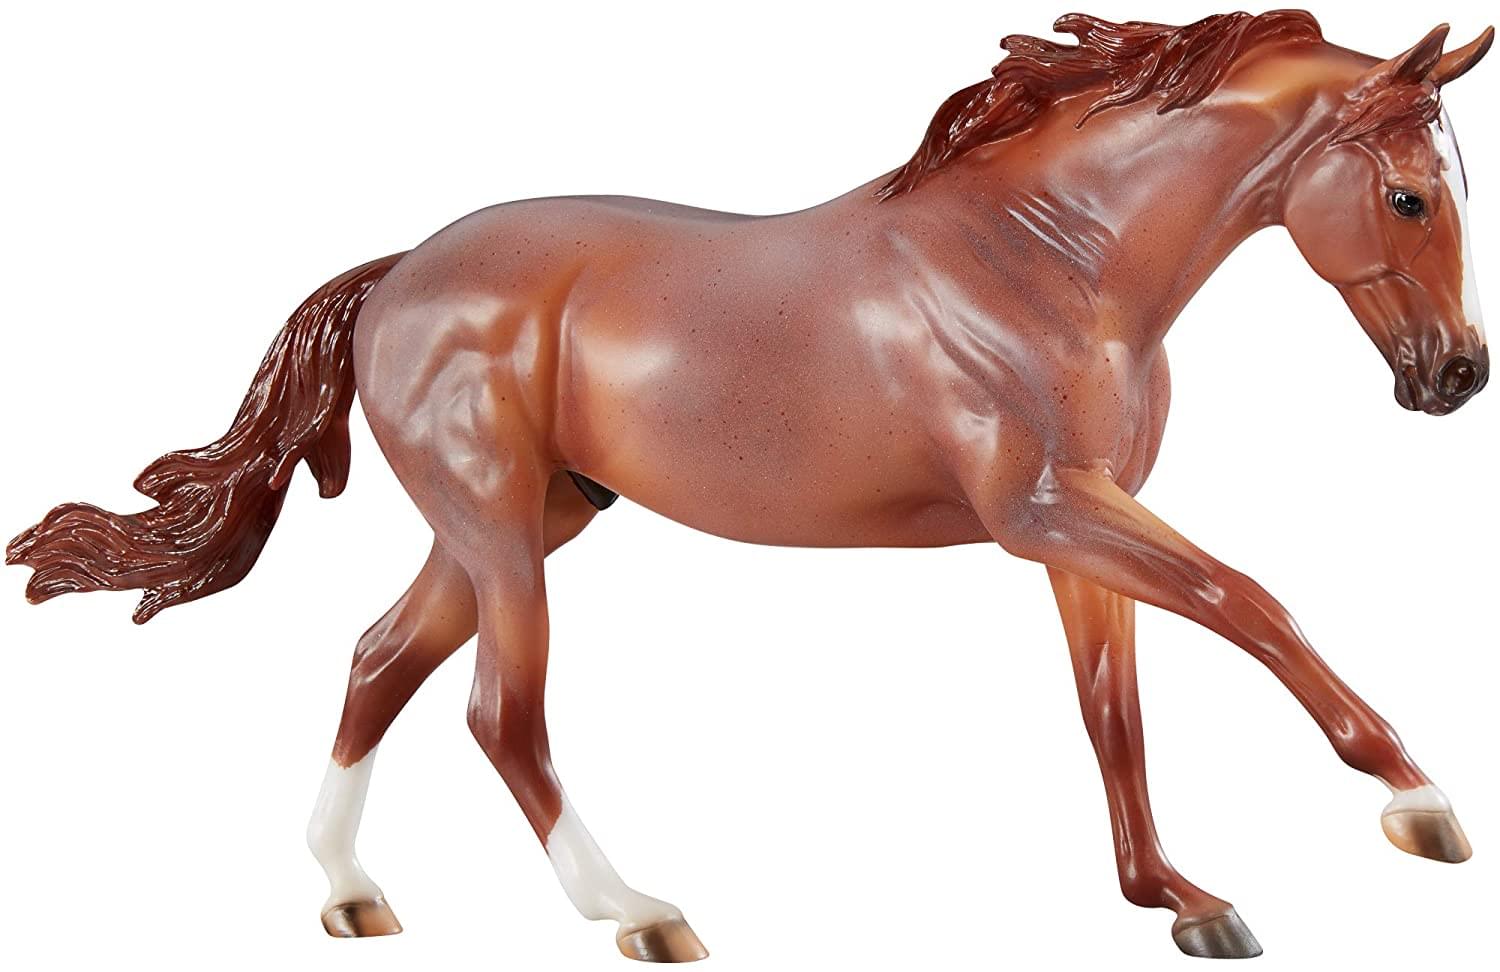 Breyer Traditional 1:9 Scale Model Horse | Peptoboonsmal | Champion Cutting Horse